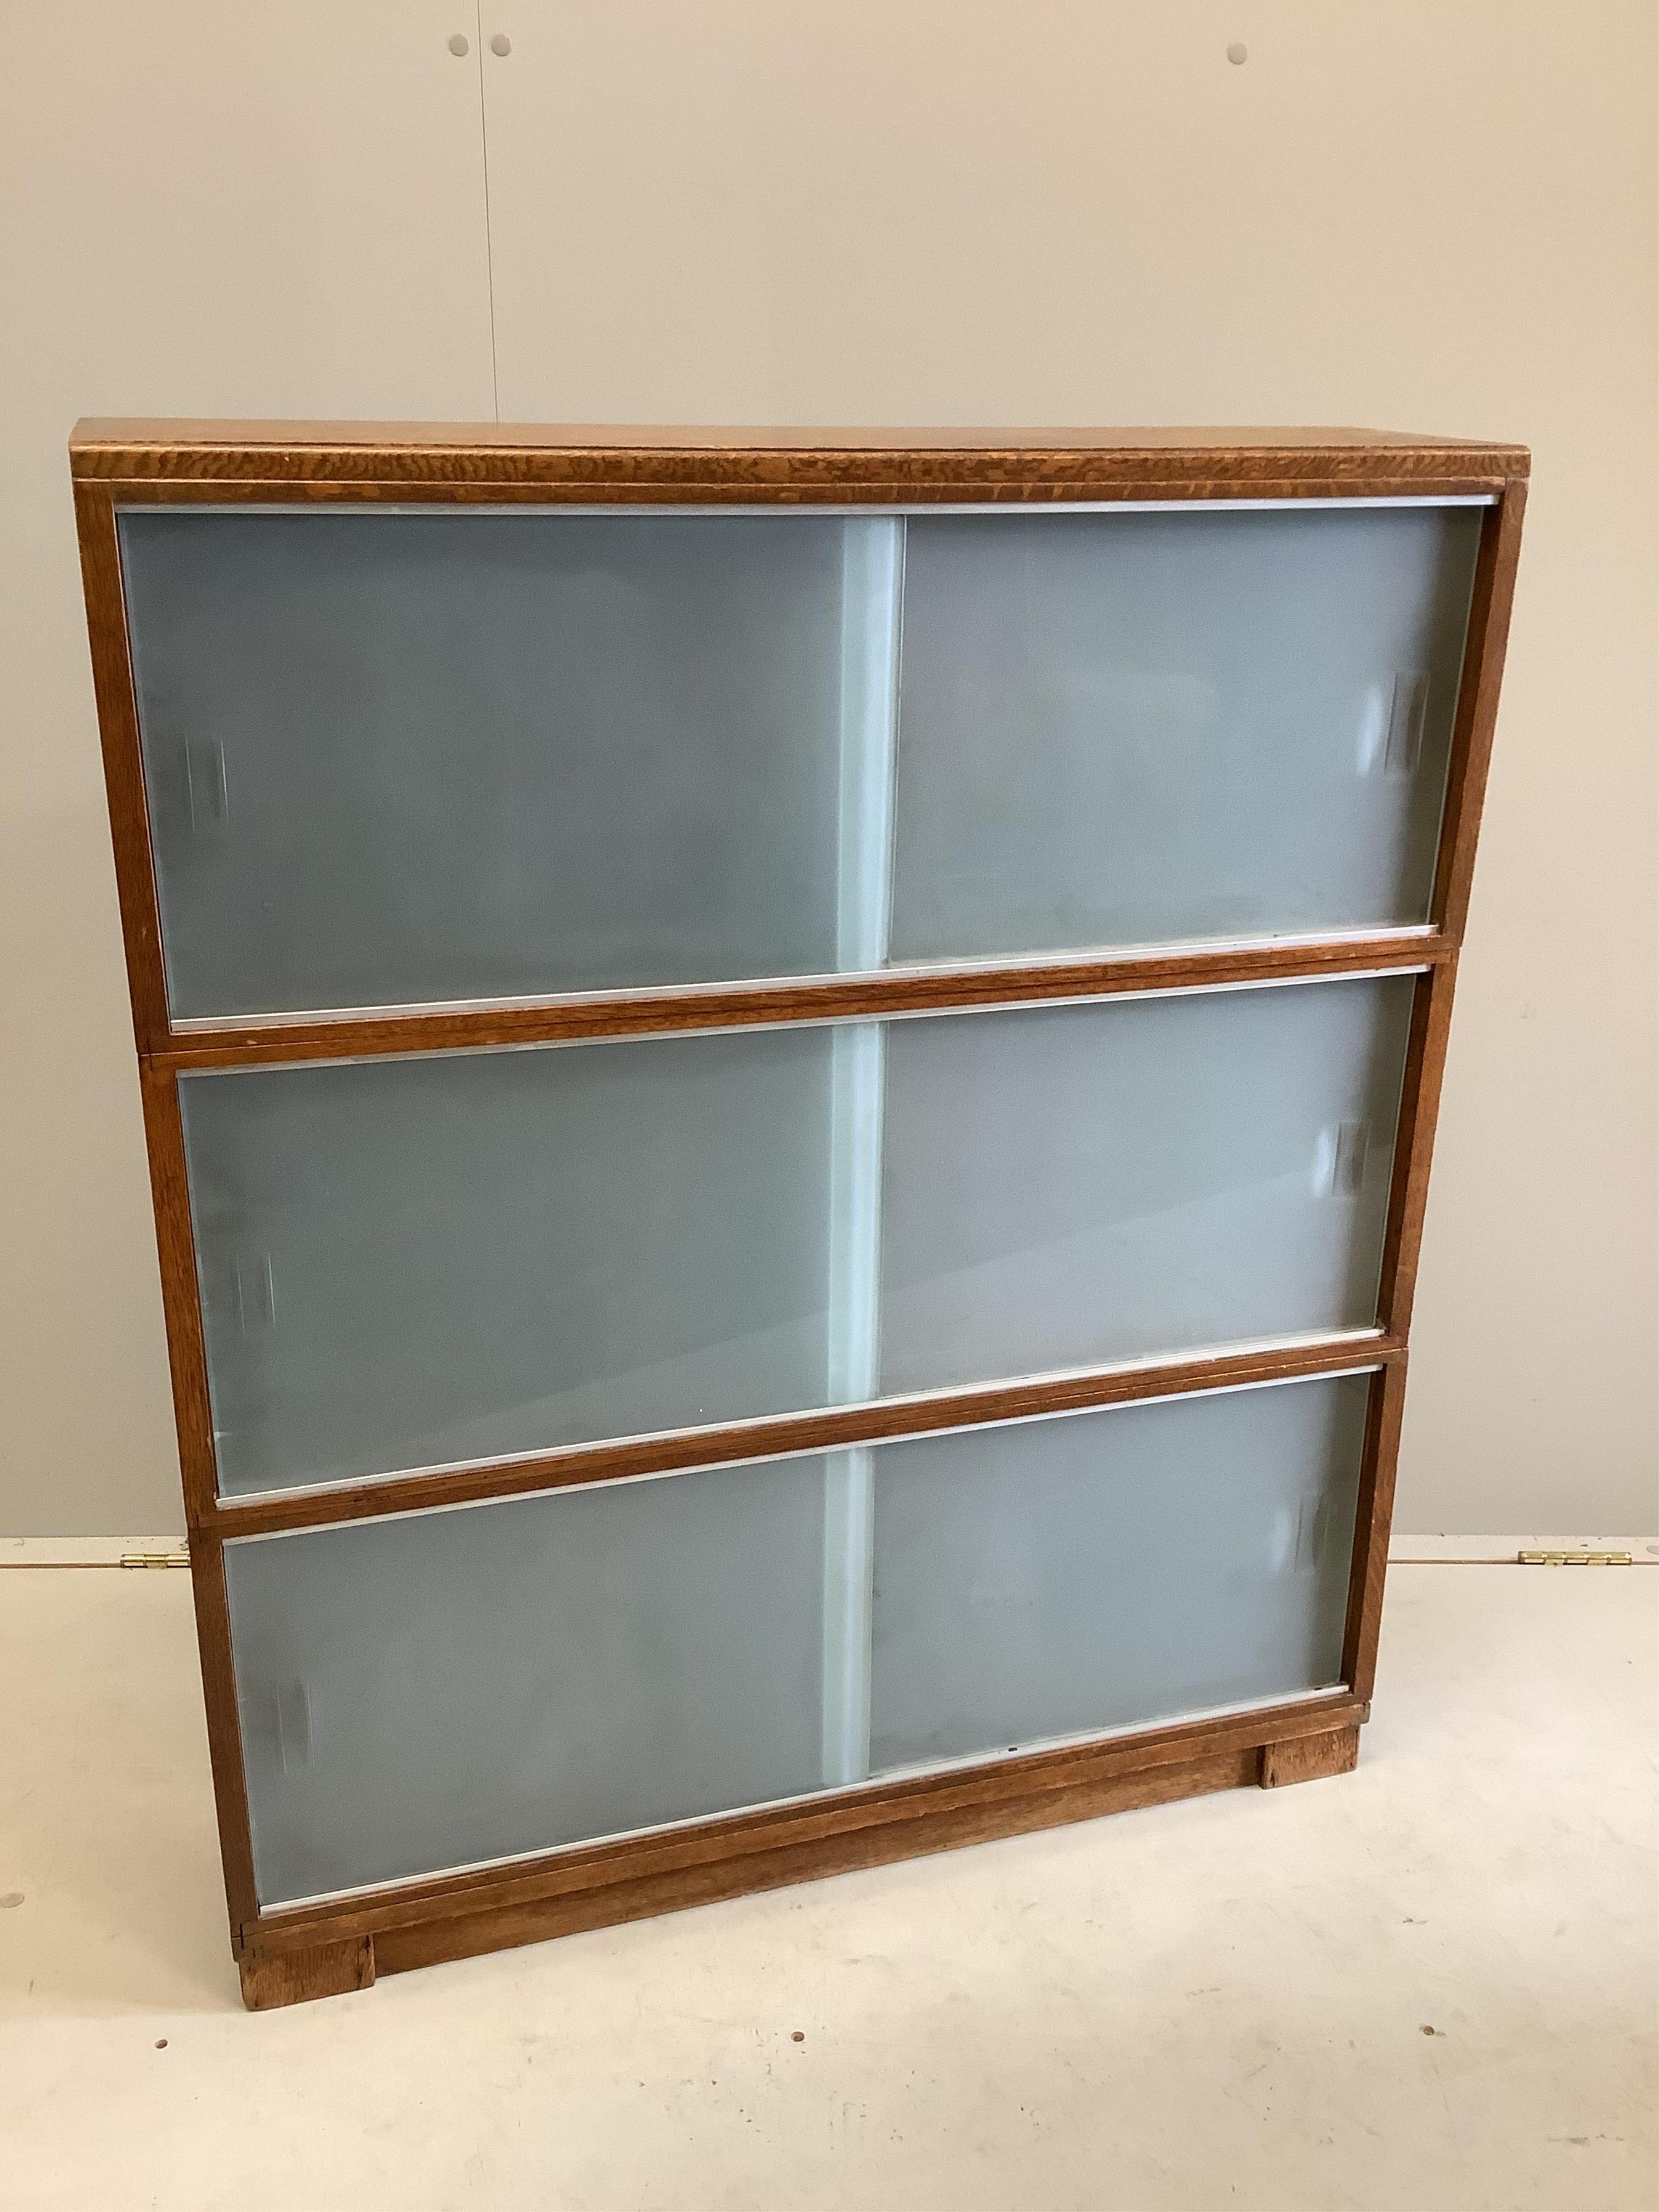 A three section Minty oak bookcase, width 89cm, depth 23cm, height 104cm